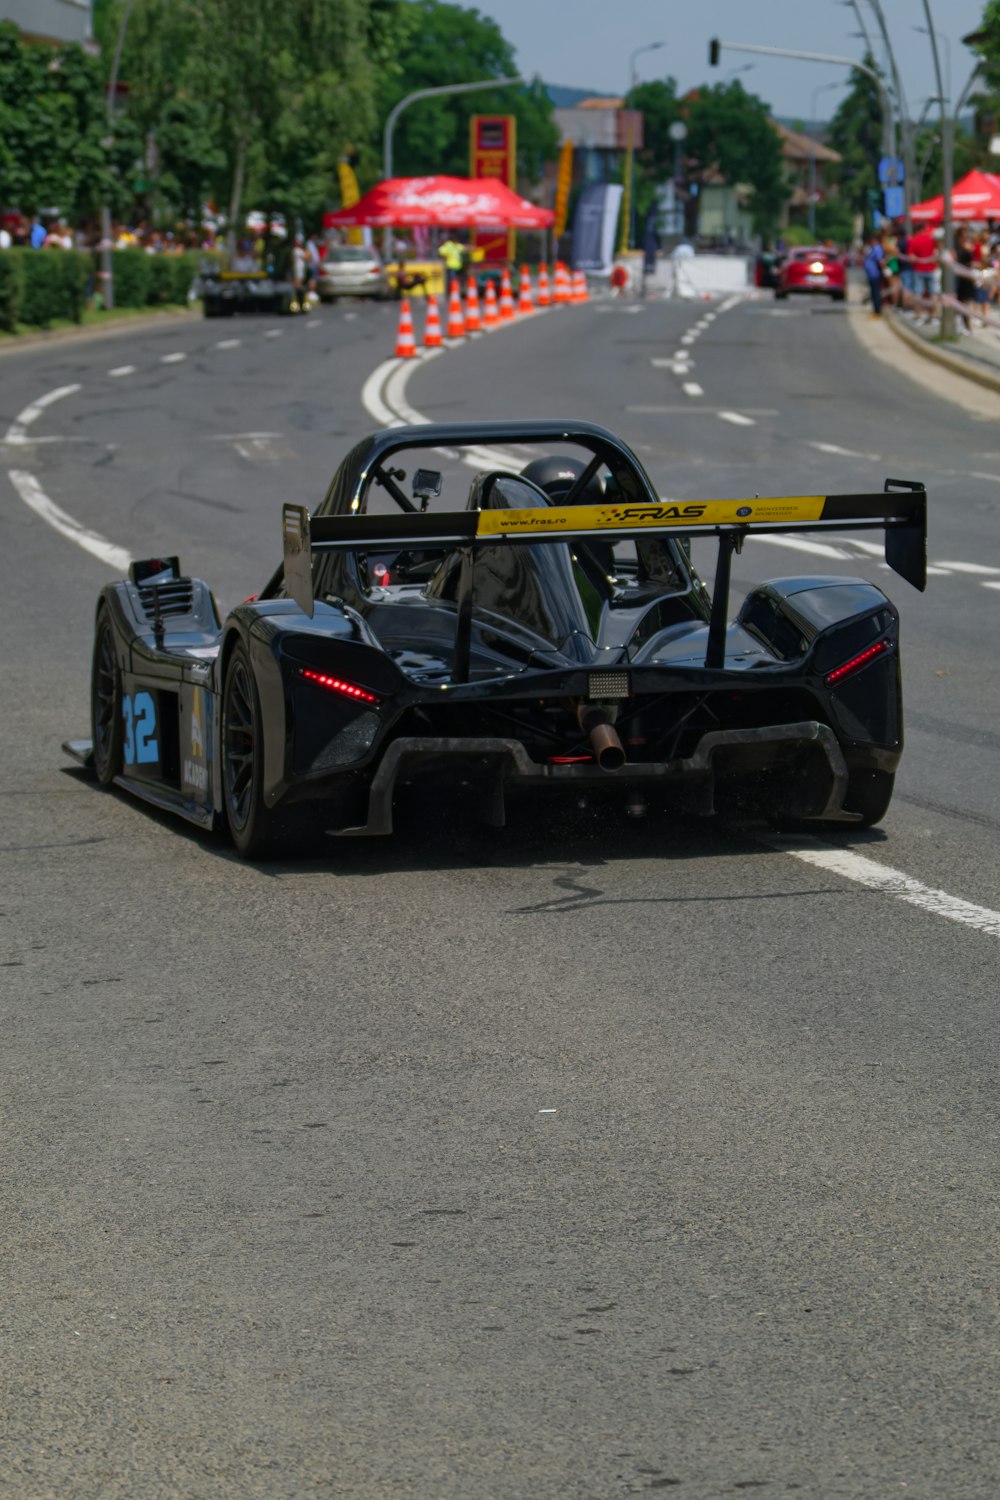 a black race car driving down a street